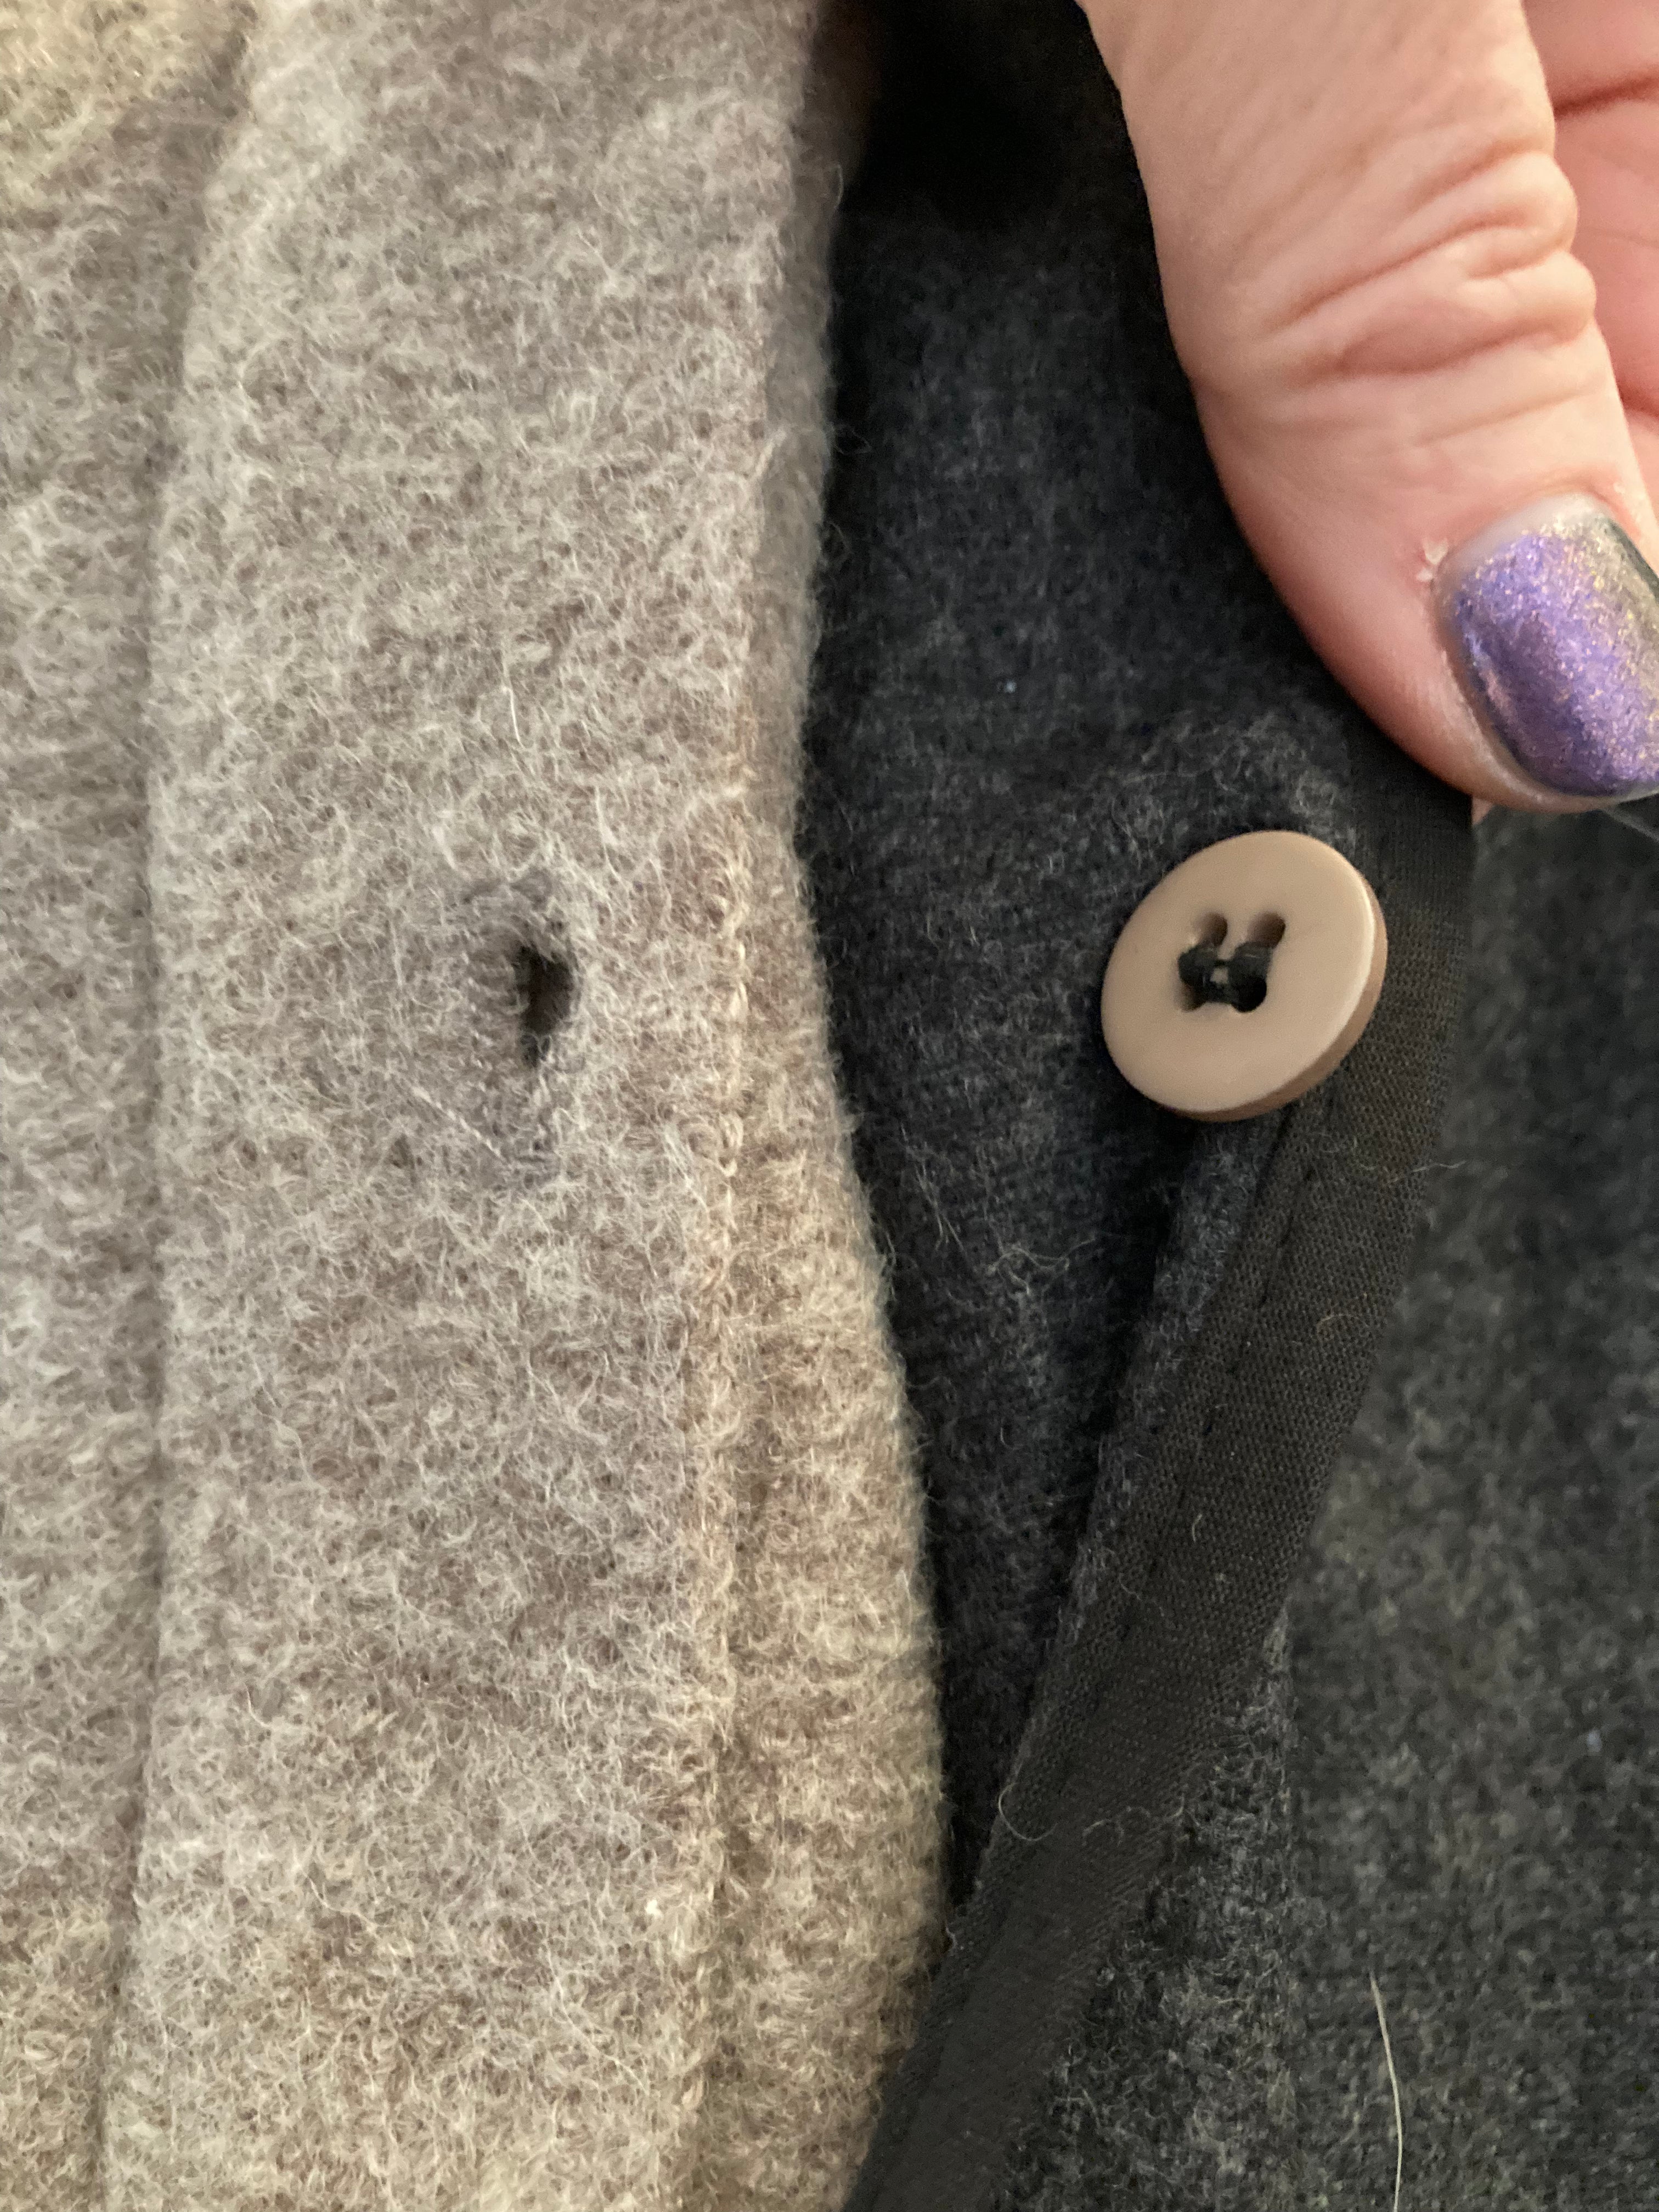 Hilary Radley Heather Beige Wool Coat with Fur Trim, 6